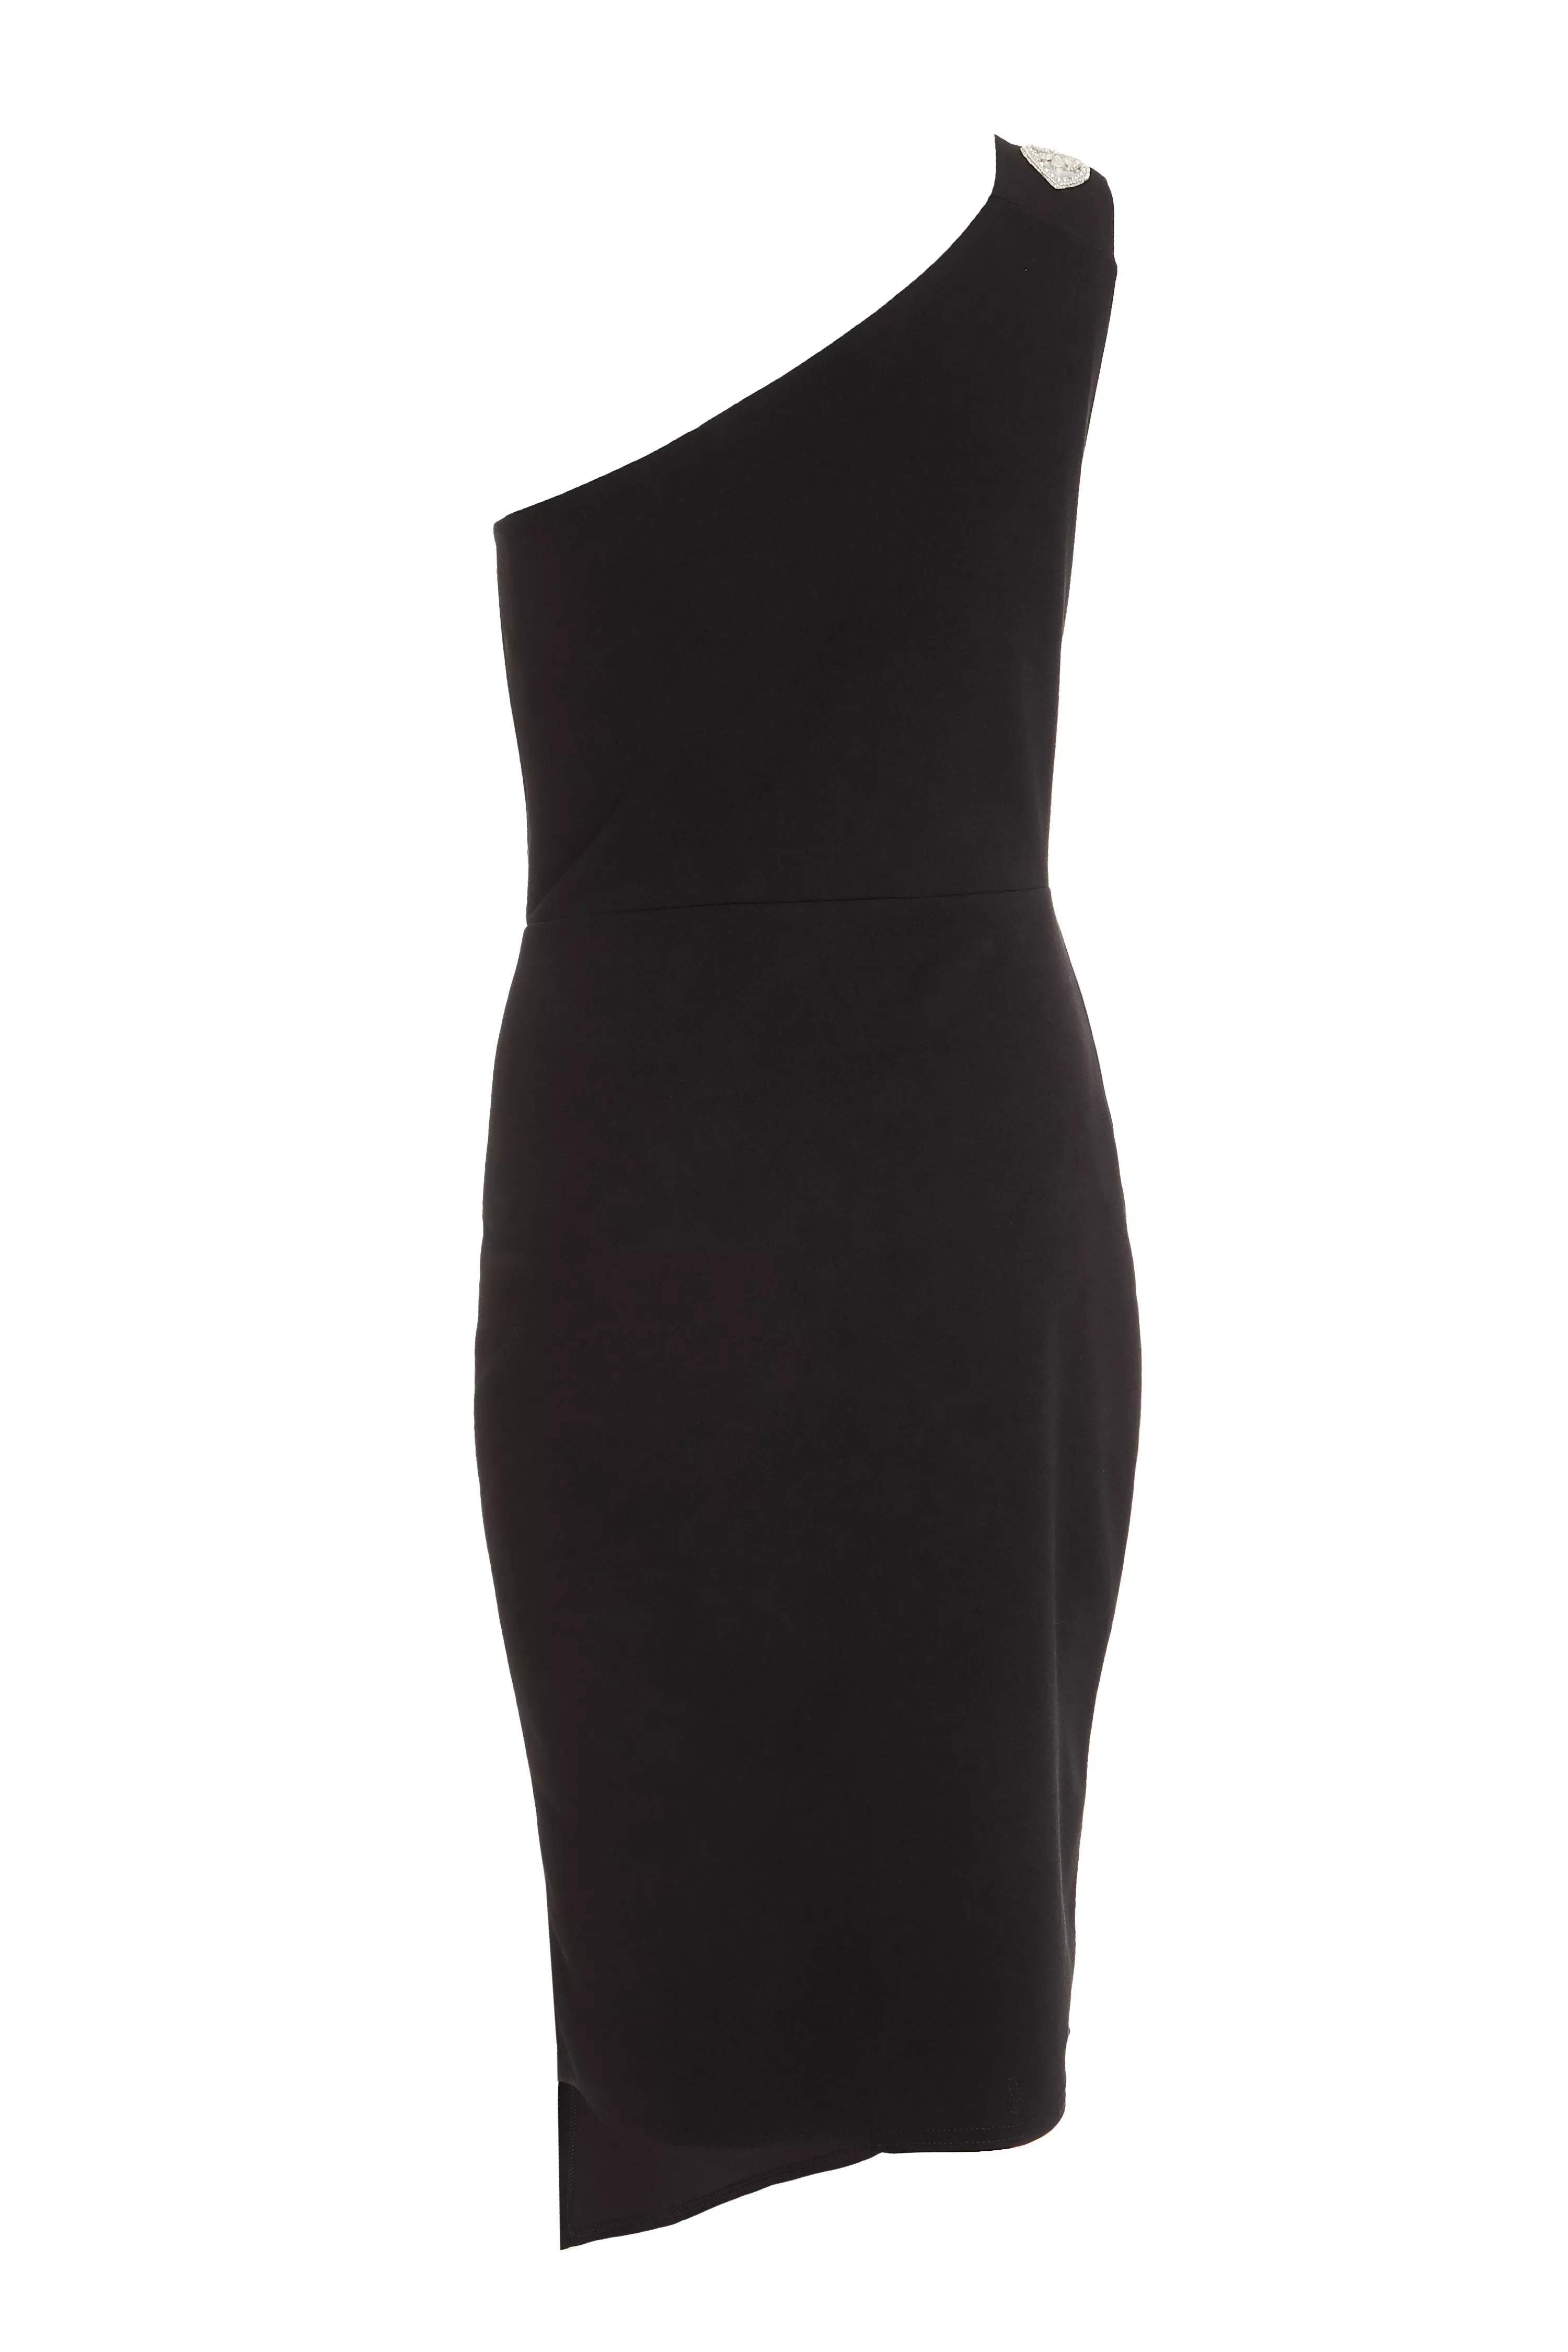 Black One Shoulder Embellished Midi Dress - QUIZ Clothing